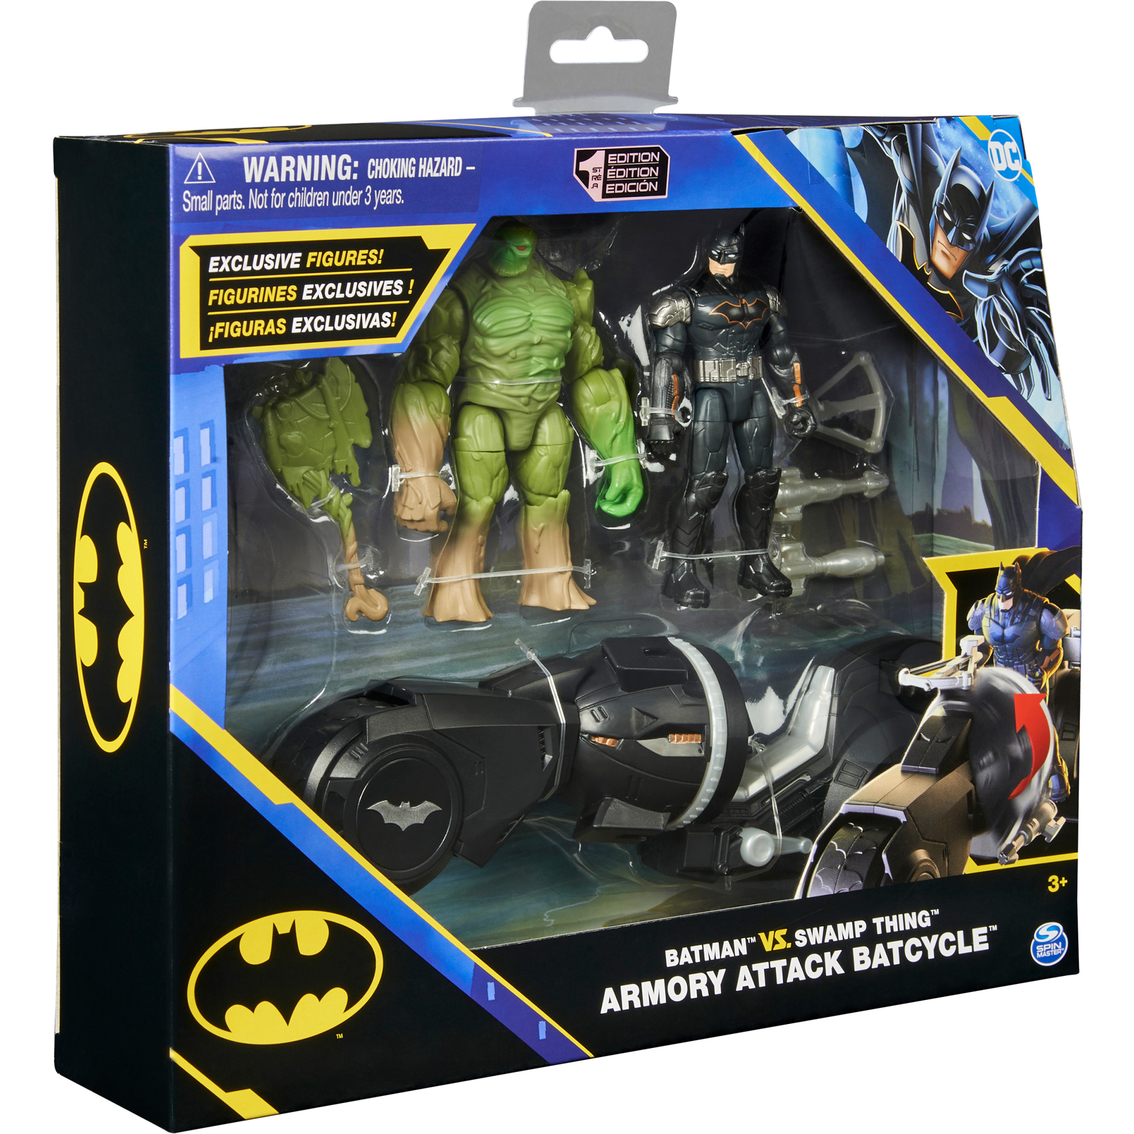 DC Comics Batman vs. Swamp Thing Armory Attack Batcycle Set - Image 2 of 7